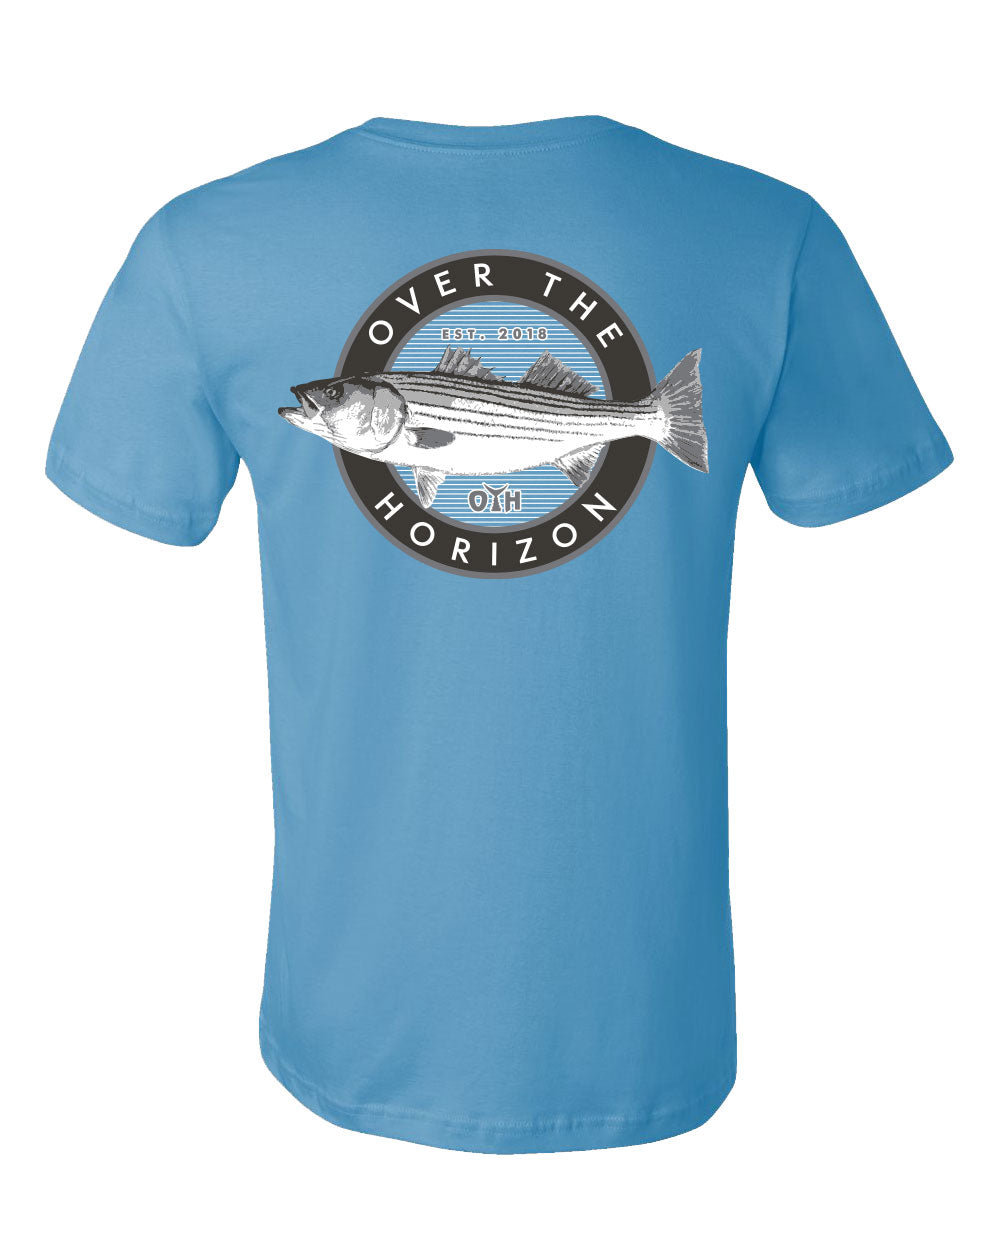 O.T.H.  Trophy series "Stripe bass"  t-shirt Ocean Blue